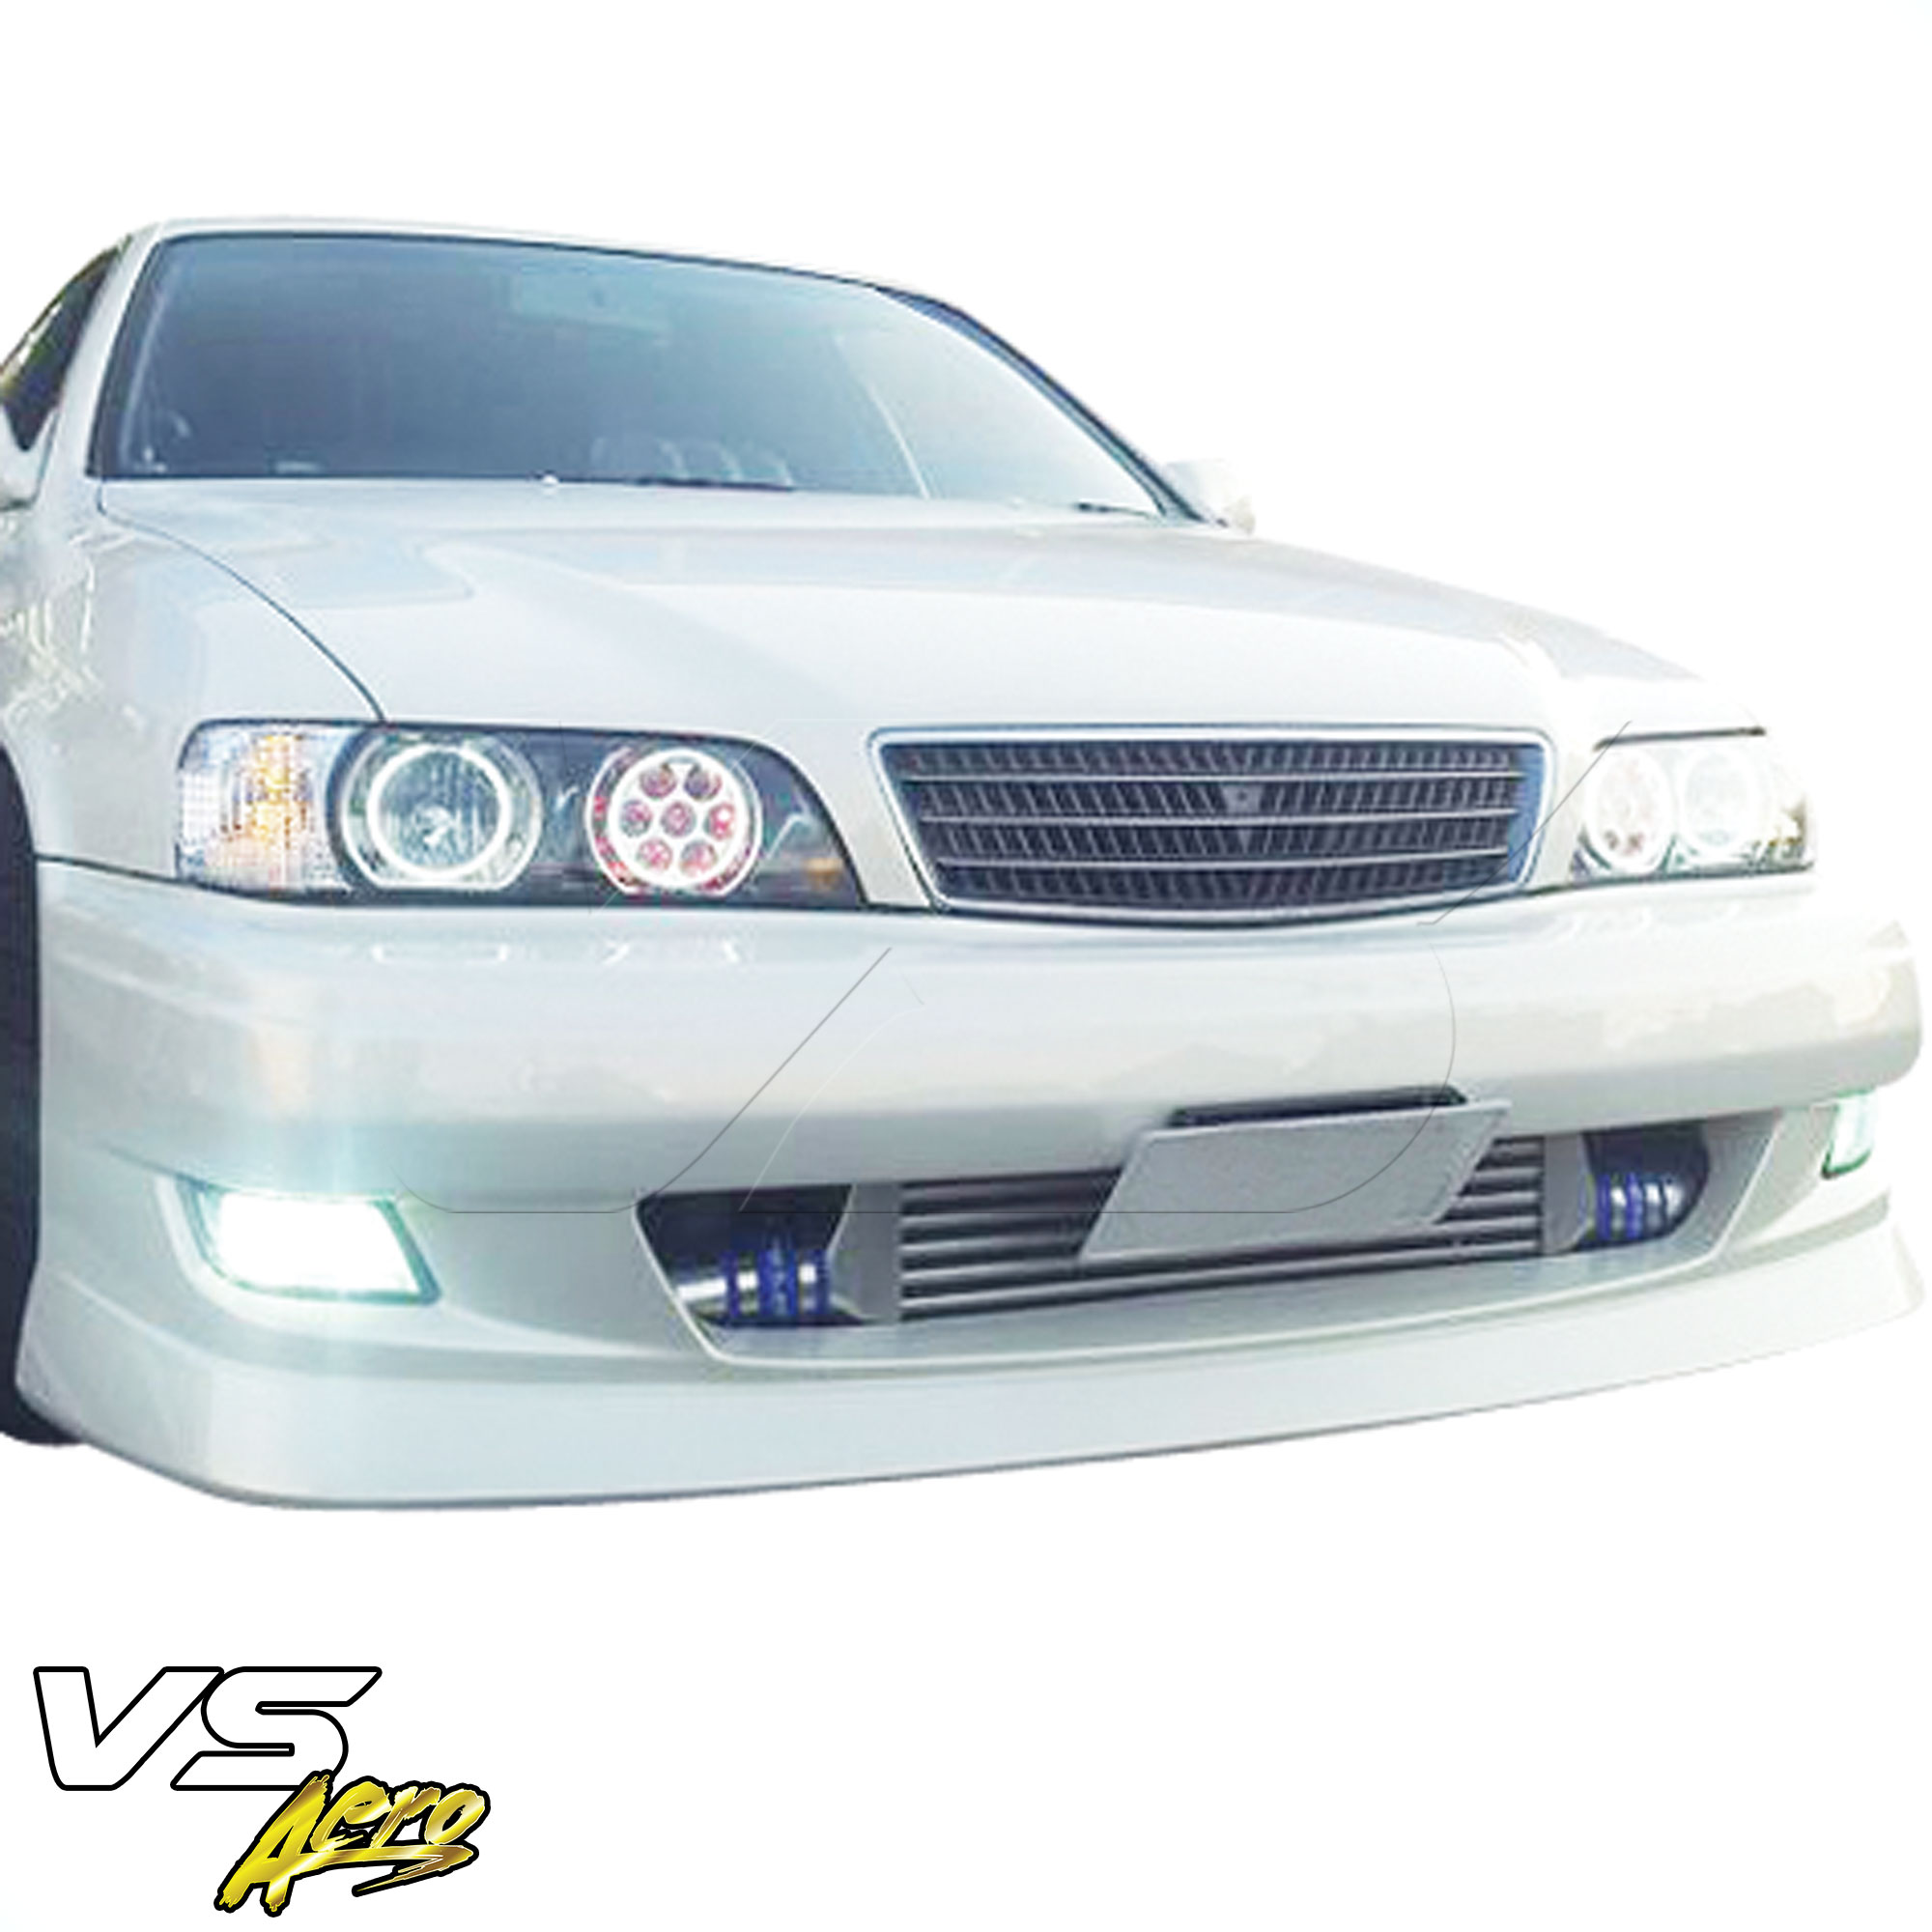 VSaero FRP URA vL Front Bumper > Toyota Chaser JZX100 1996-2000 - Image 4